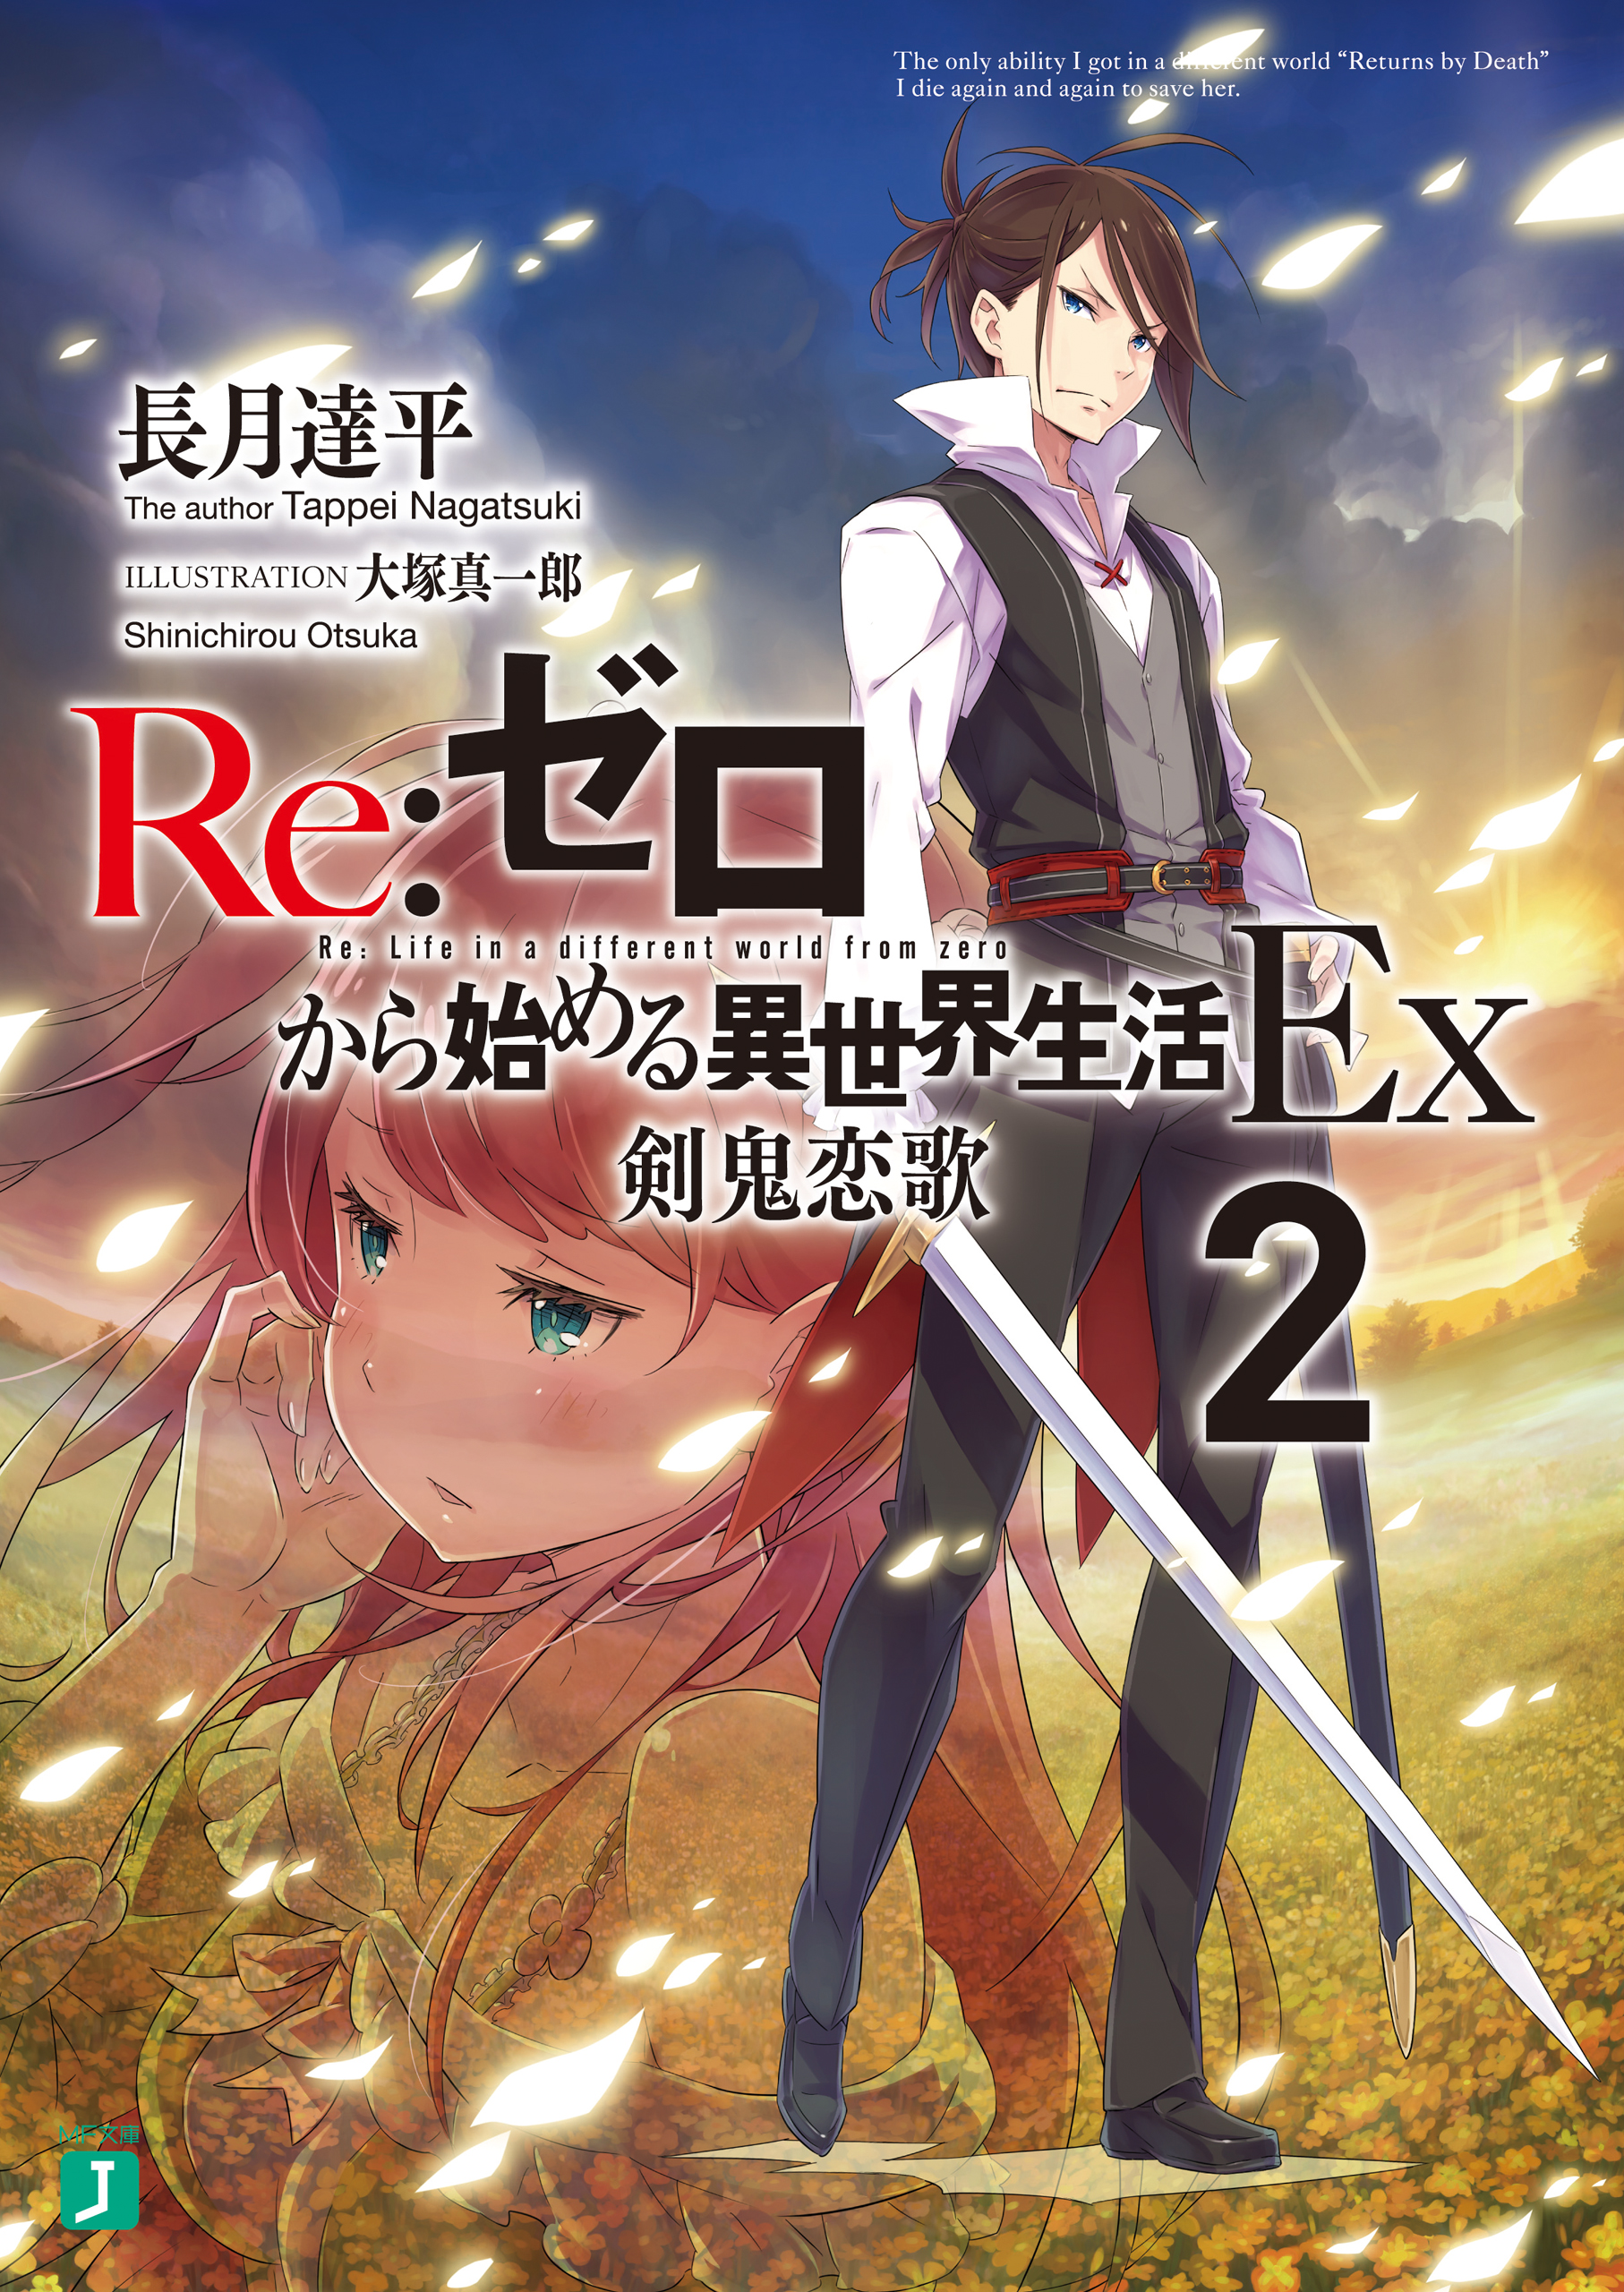 Re:Zero Ex Light Novel Volume 2 | Re:Zero Wiki | Fandom